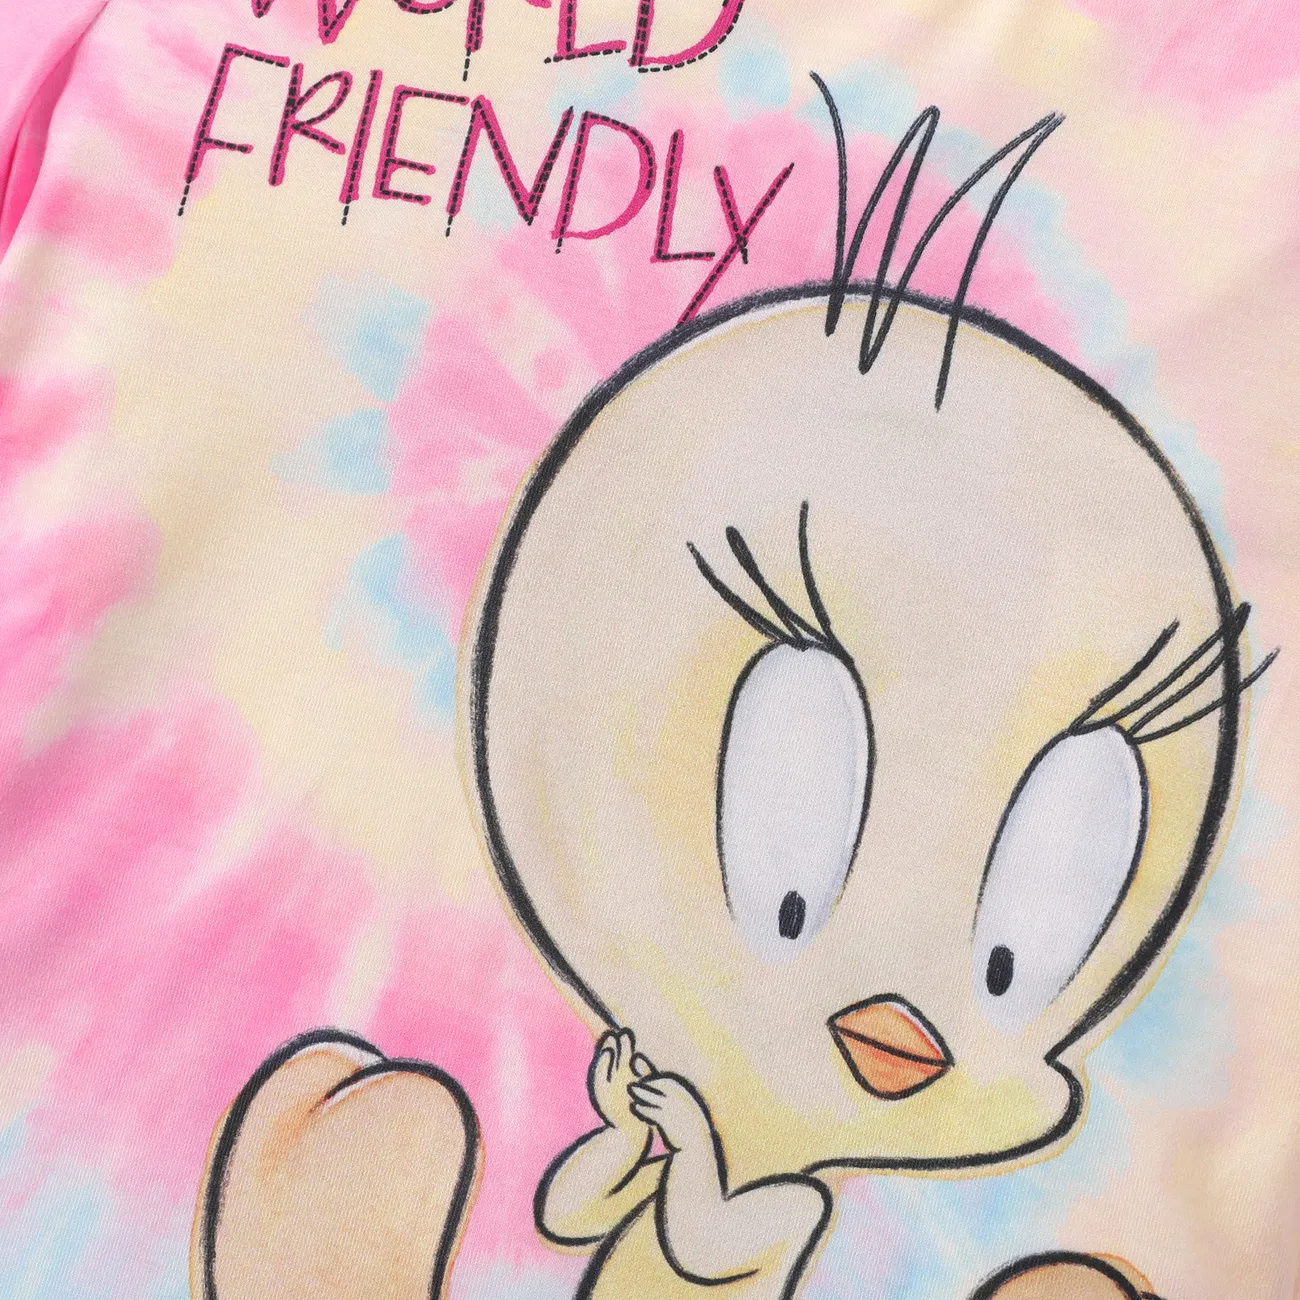 Looney Tunes Enfant en bas âge Unisexe Enfantin Manches courtes T-Shirt roseo big image 1